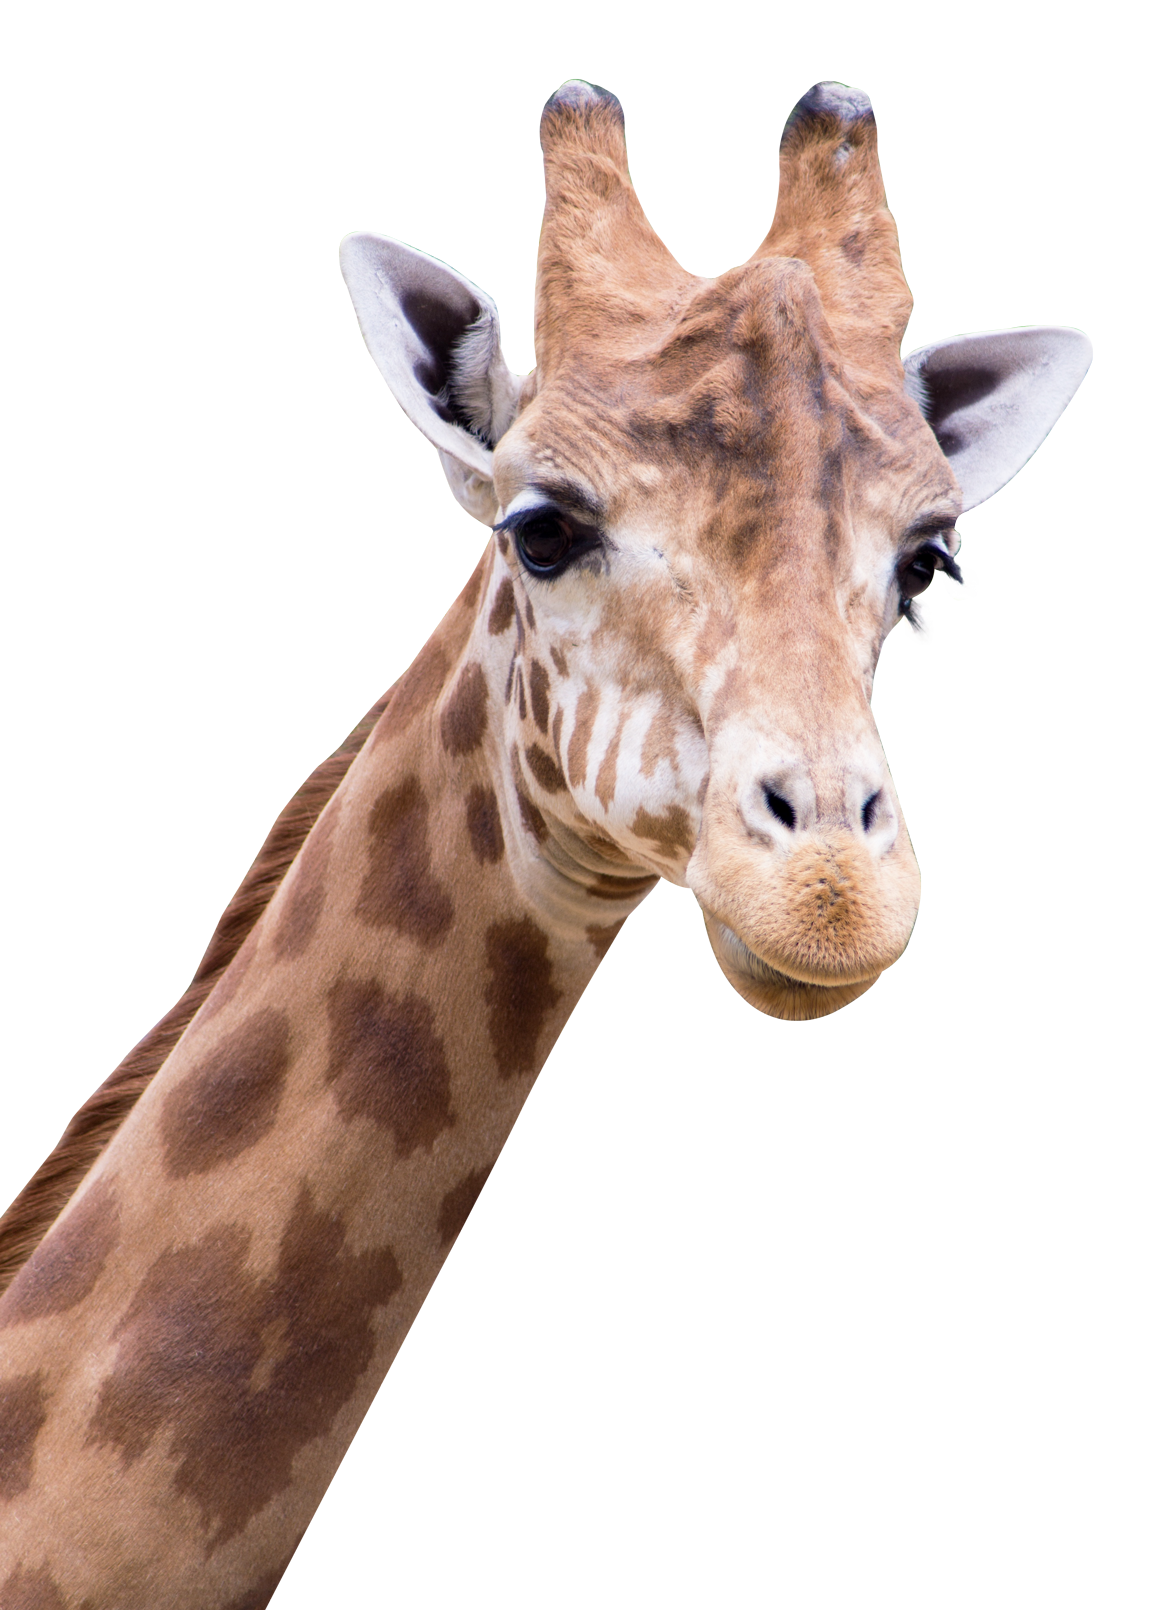 Giraffe PNG Image